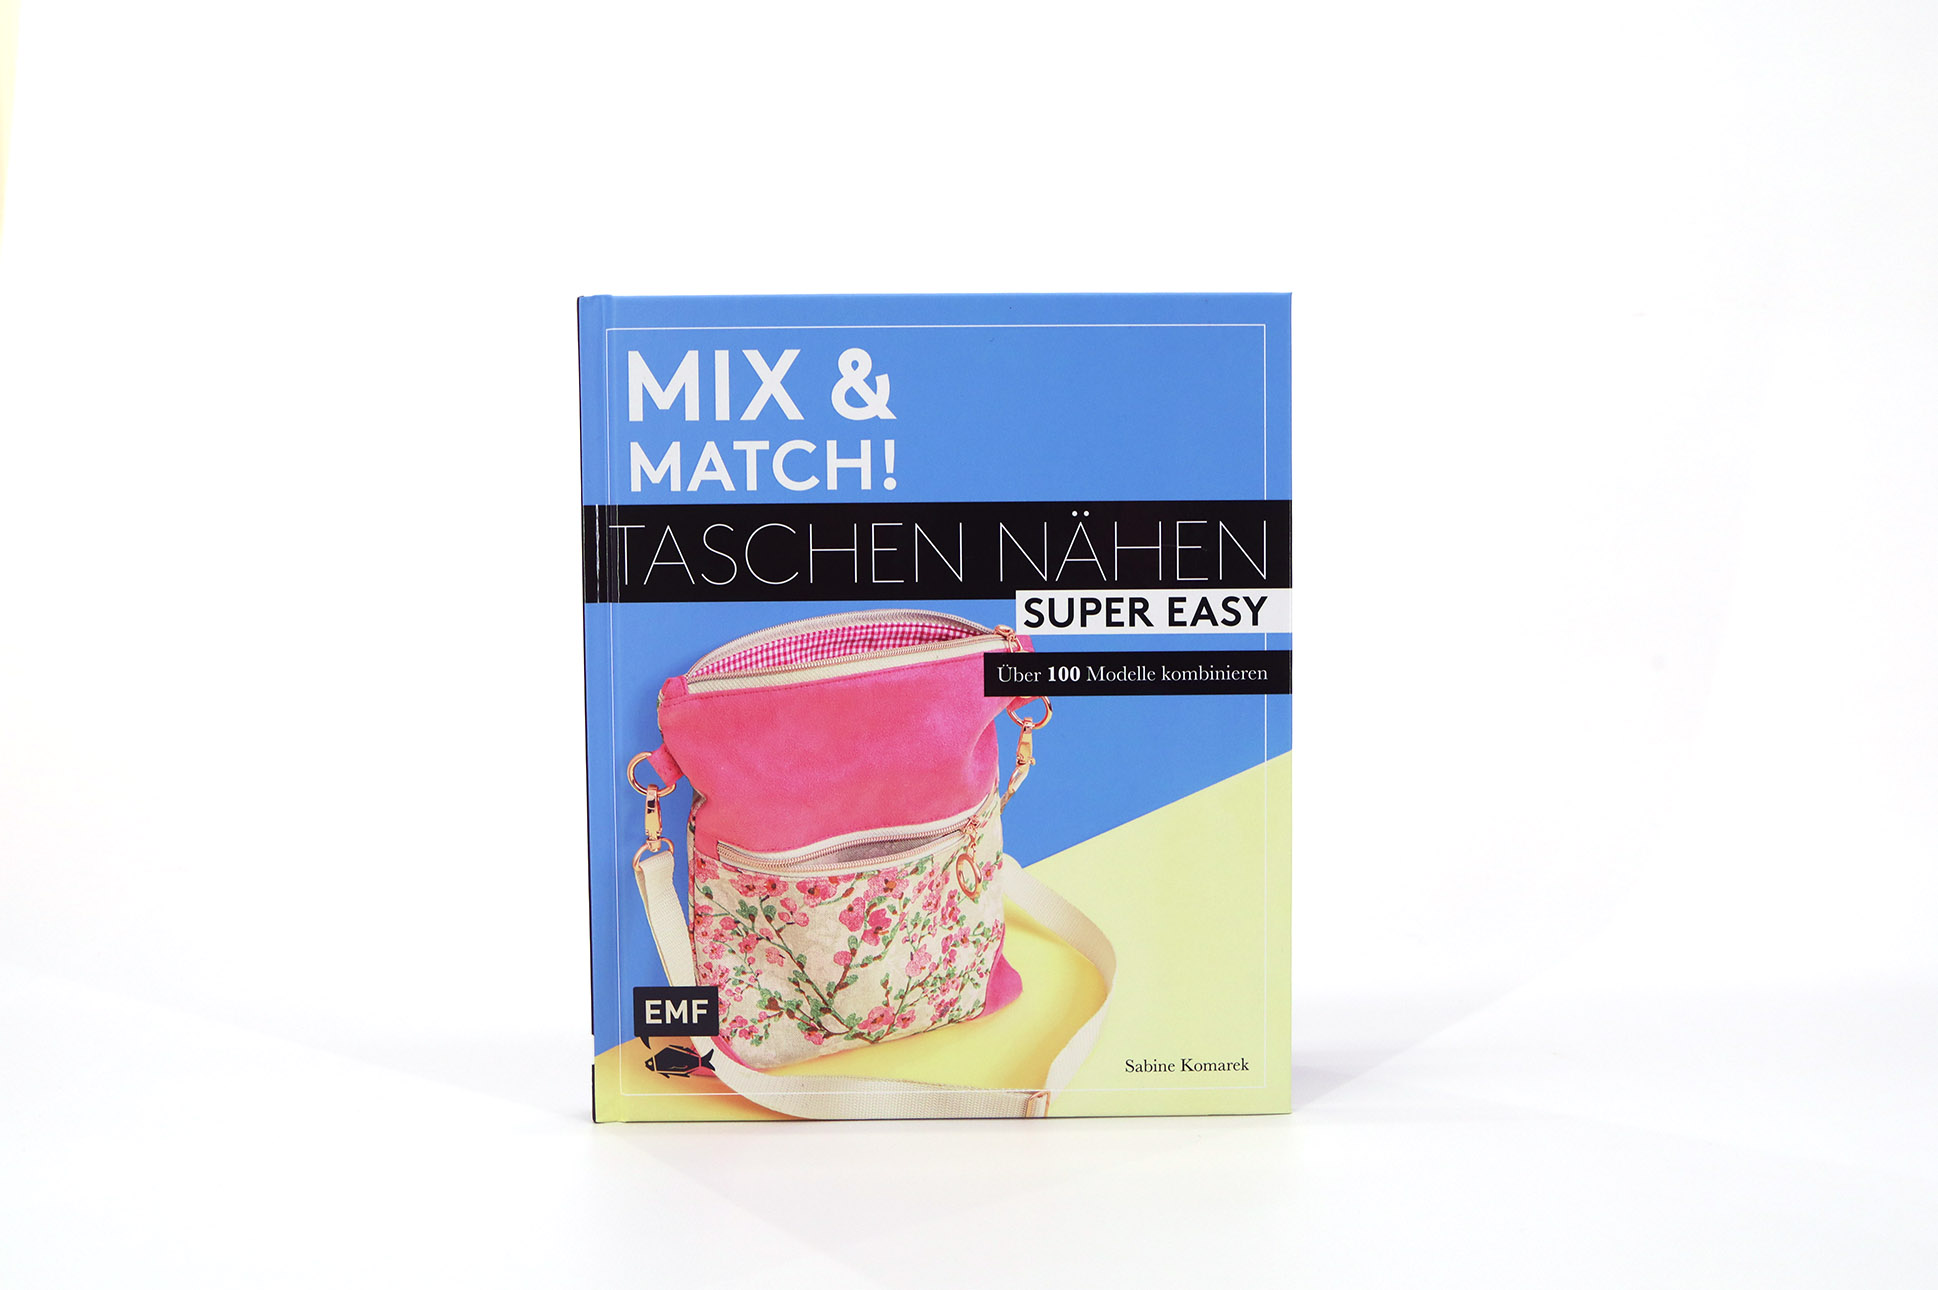 Mix & Match, cucire borse